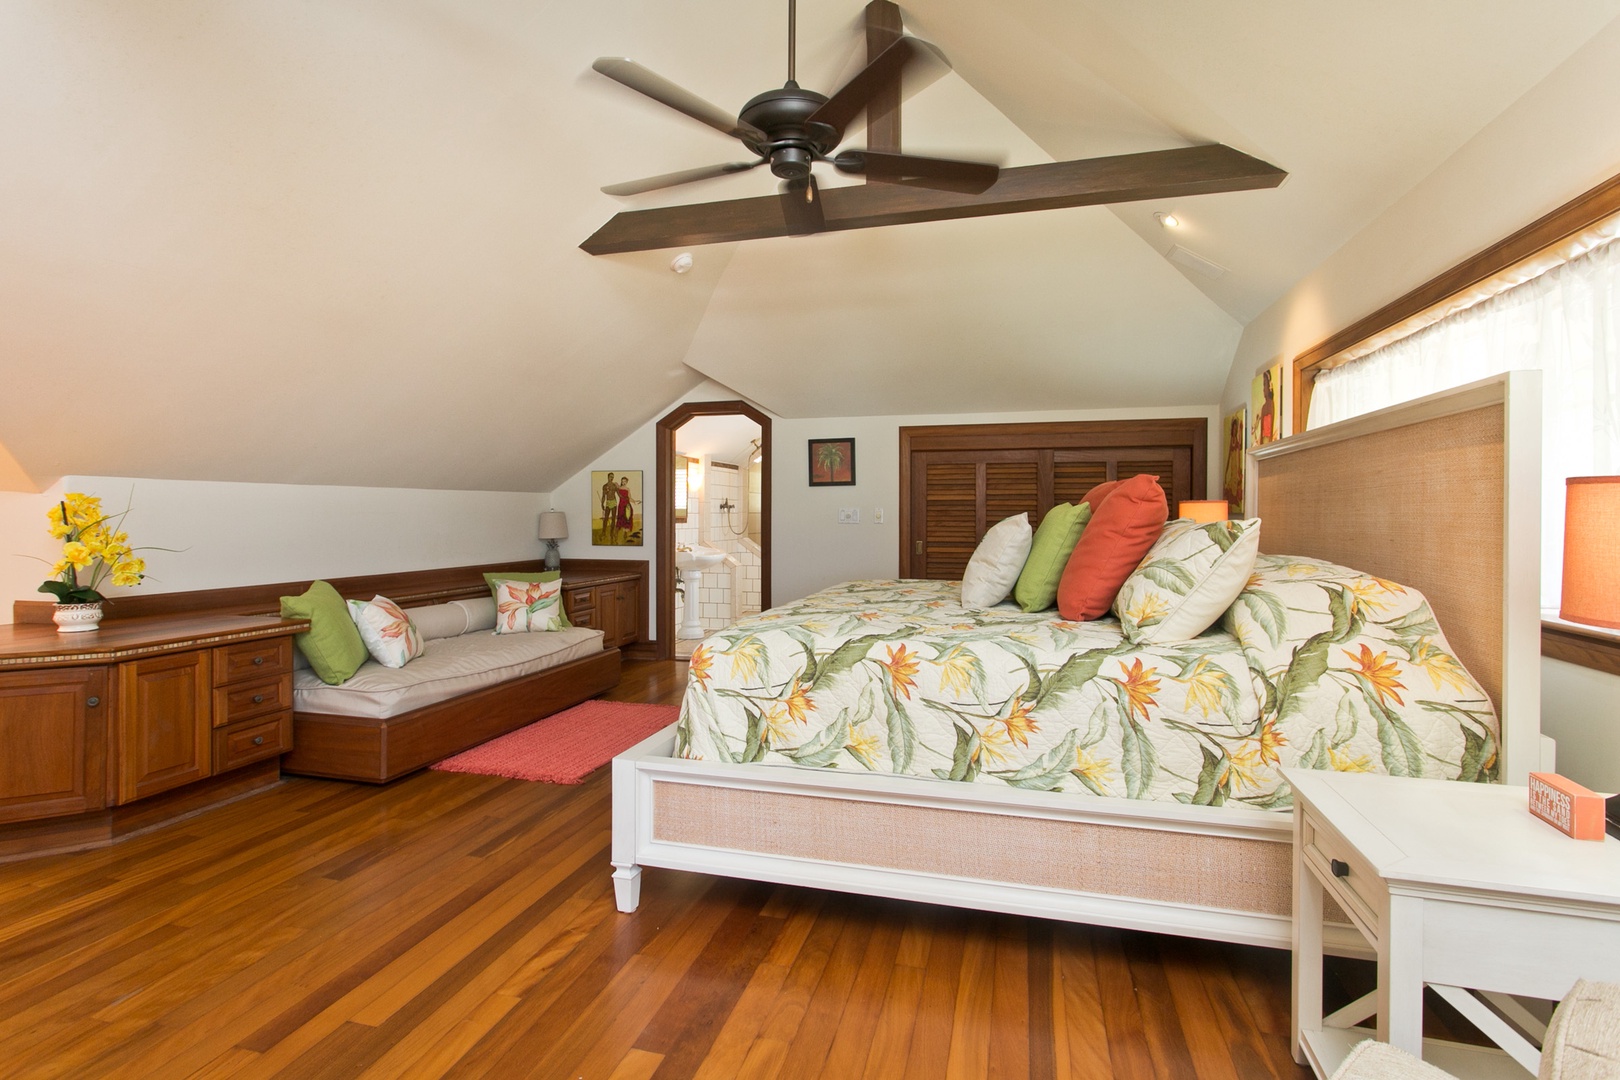 Kailua Vacation Rentals, Lanikai Village* - Hale Melia: Guest bedroom with a lounge area, fandelier and ensuite bathroom.